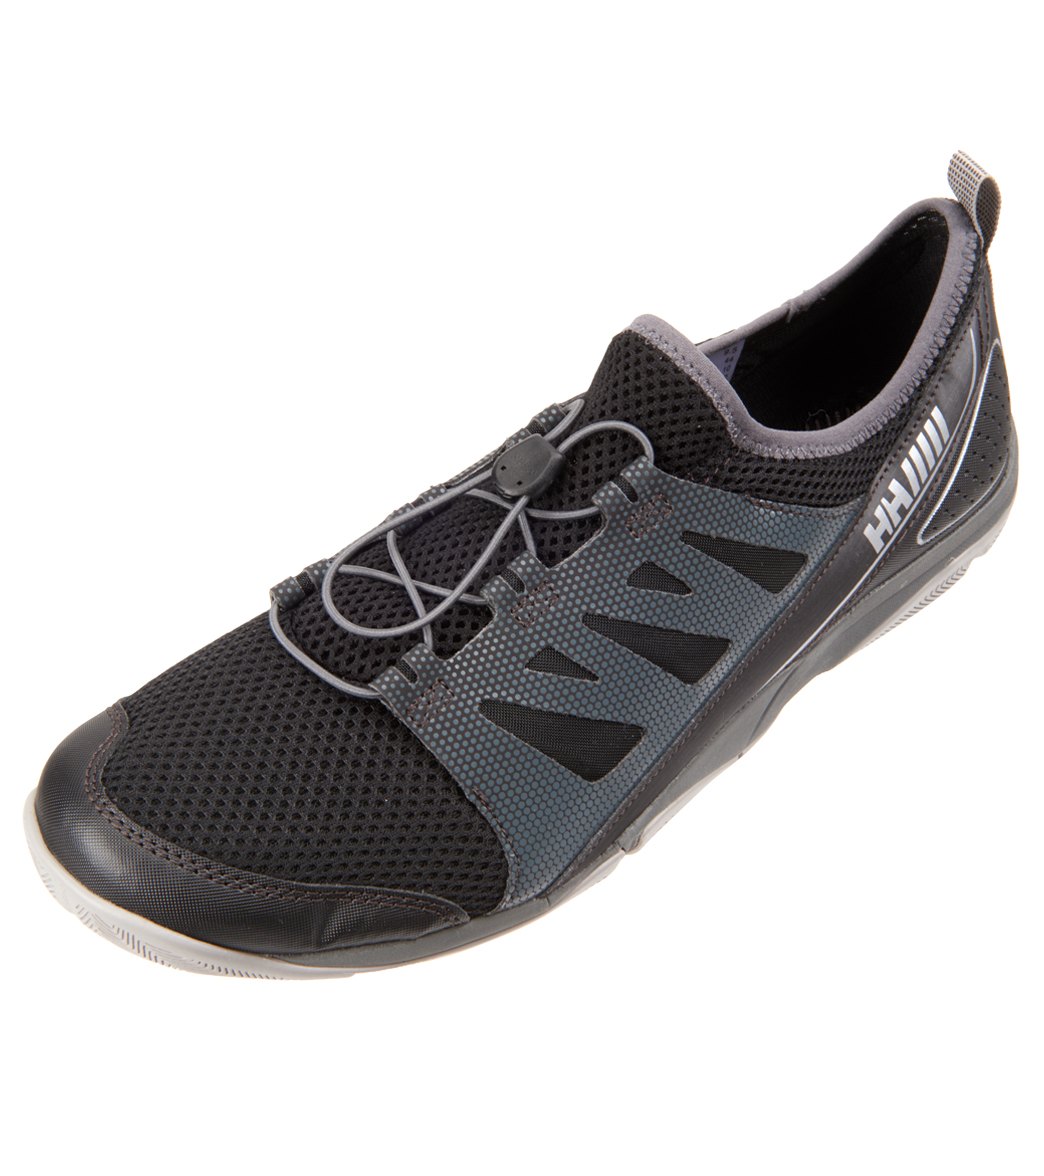 Helly Hansen Men's Aquapace 2 Water Shoes - Jet Black/Charcoal/Silver/New Light Grey 7.5 - Swimoutlet.com